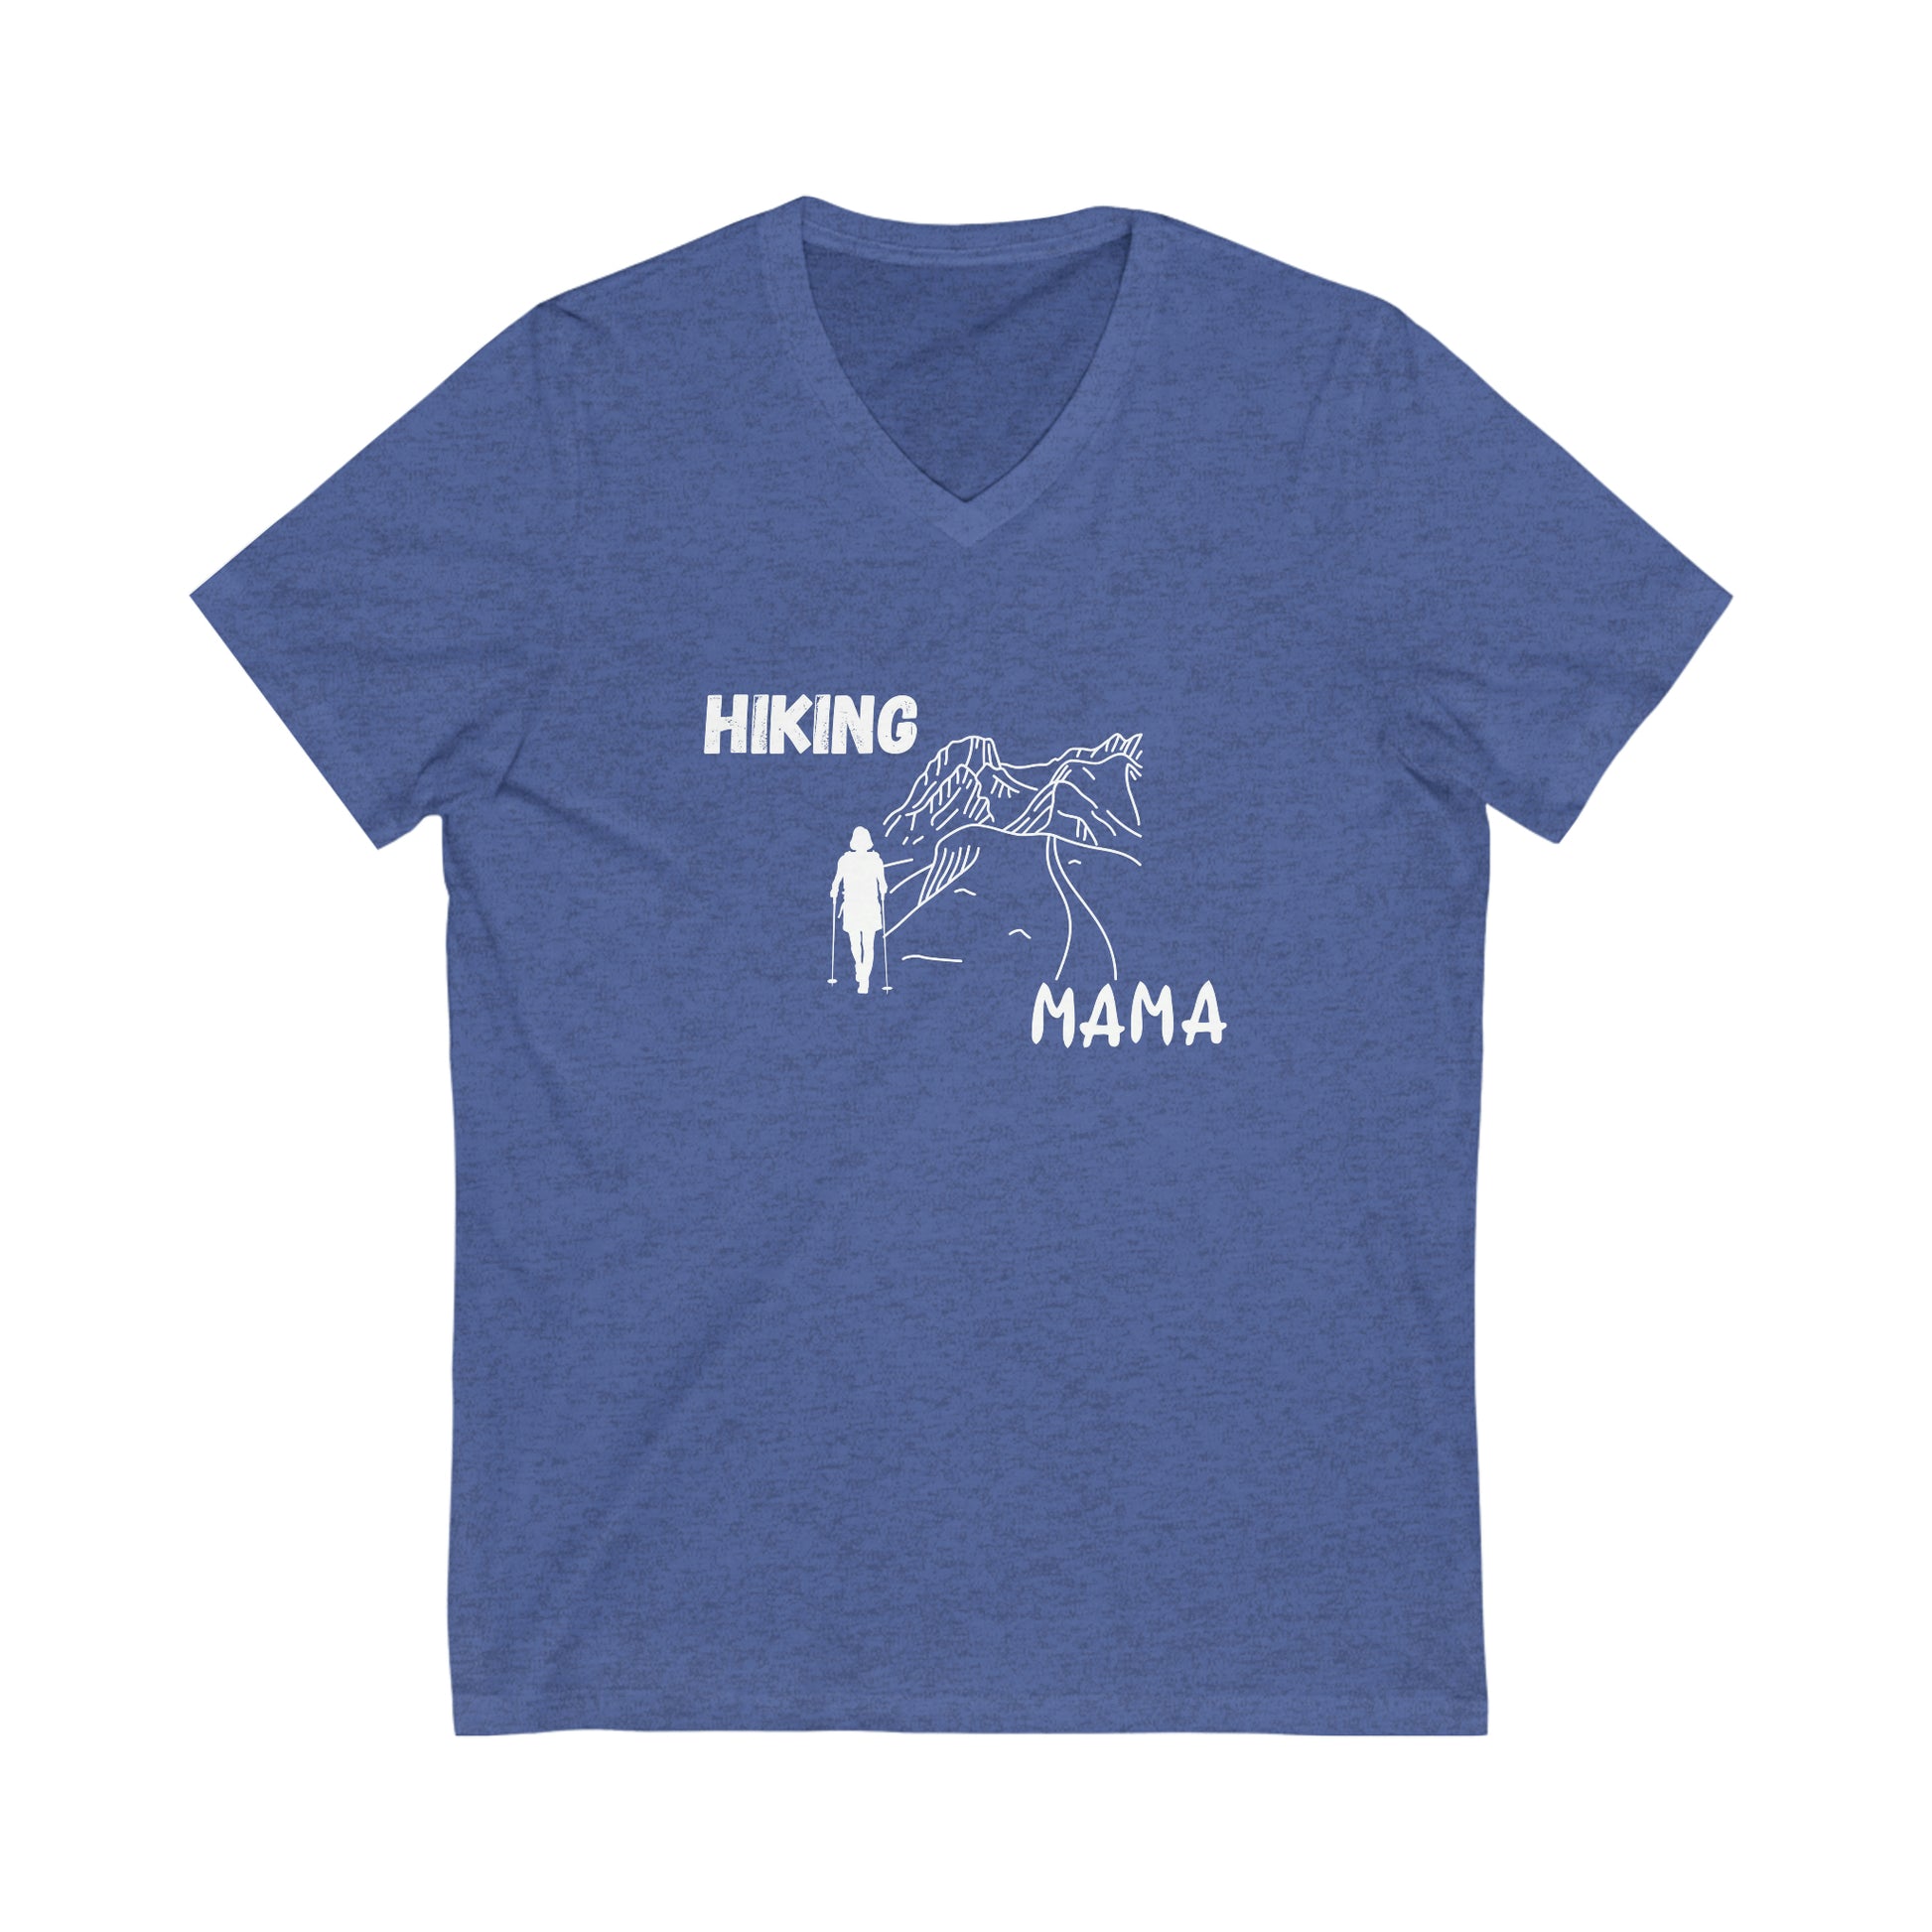 Hiking mama shirt, hiking mom apparel, hiking mama, gifts for hiking moms, apparel for moms who hike, hiking apparel